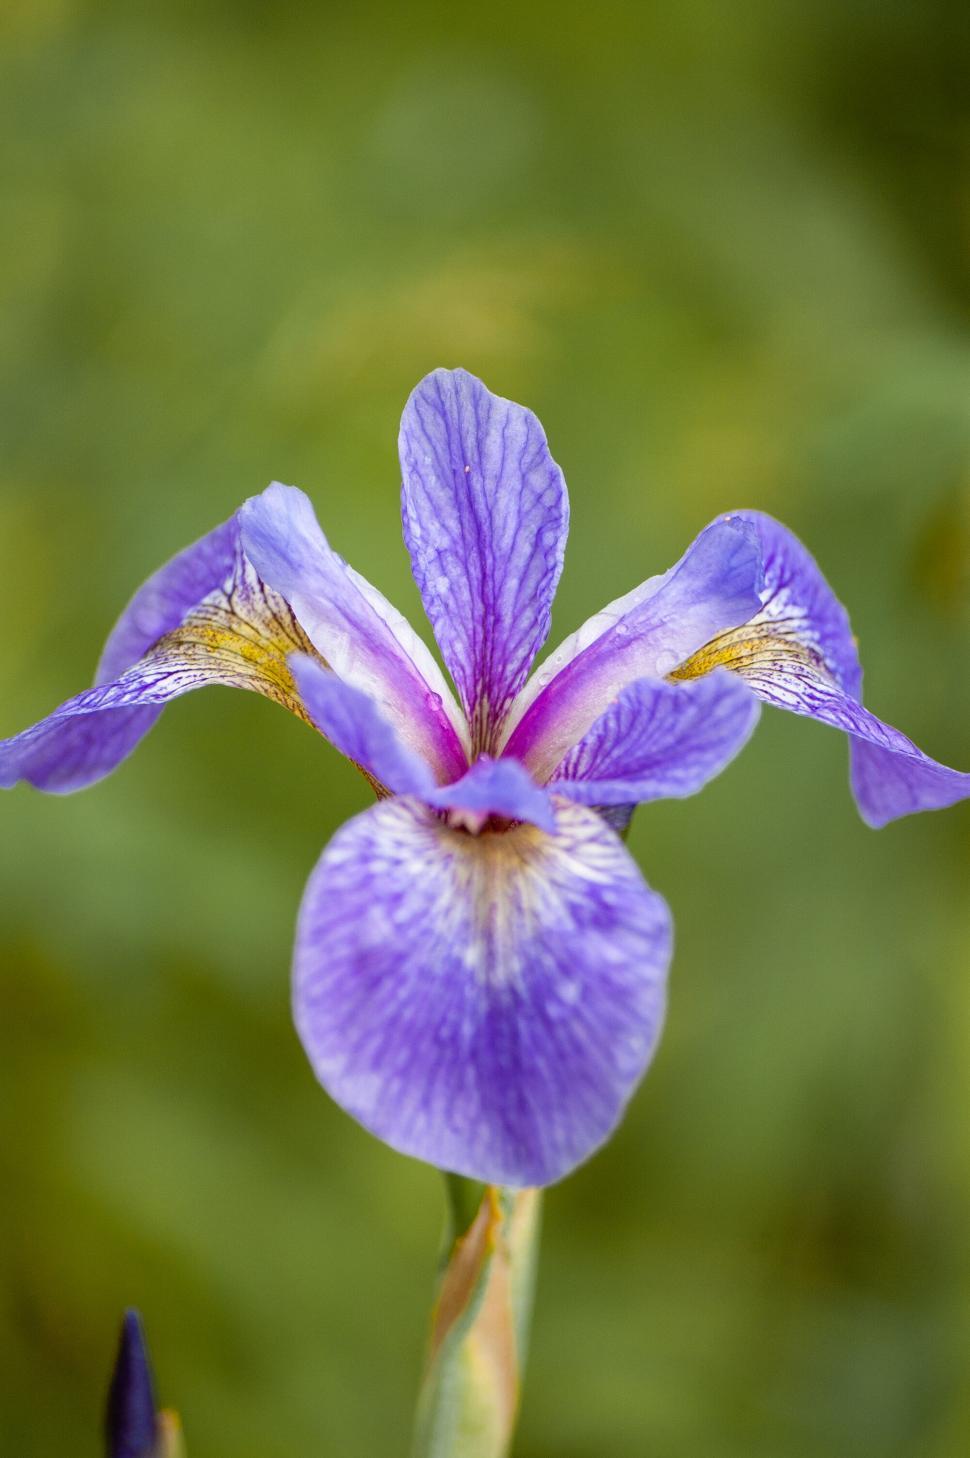 Free Image of Vibrant purple iris flower close-up 